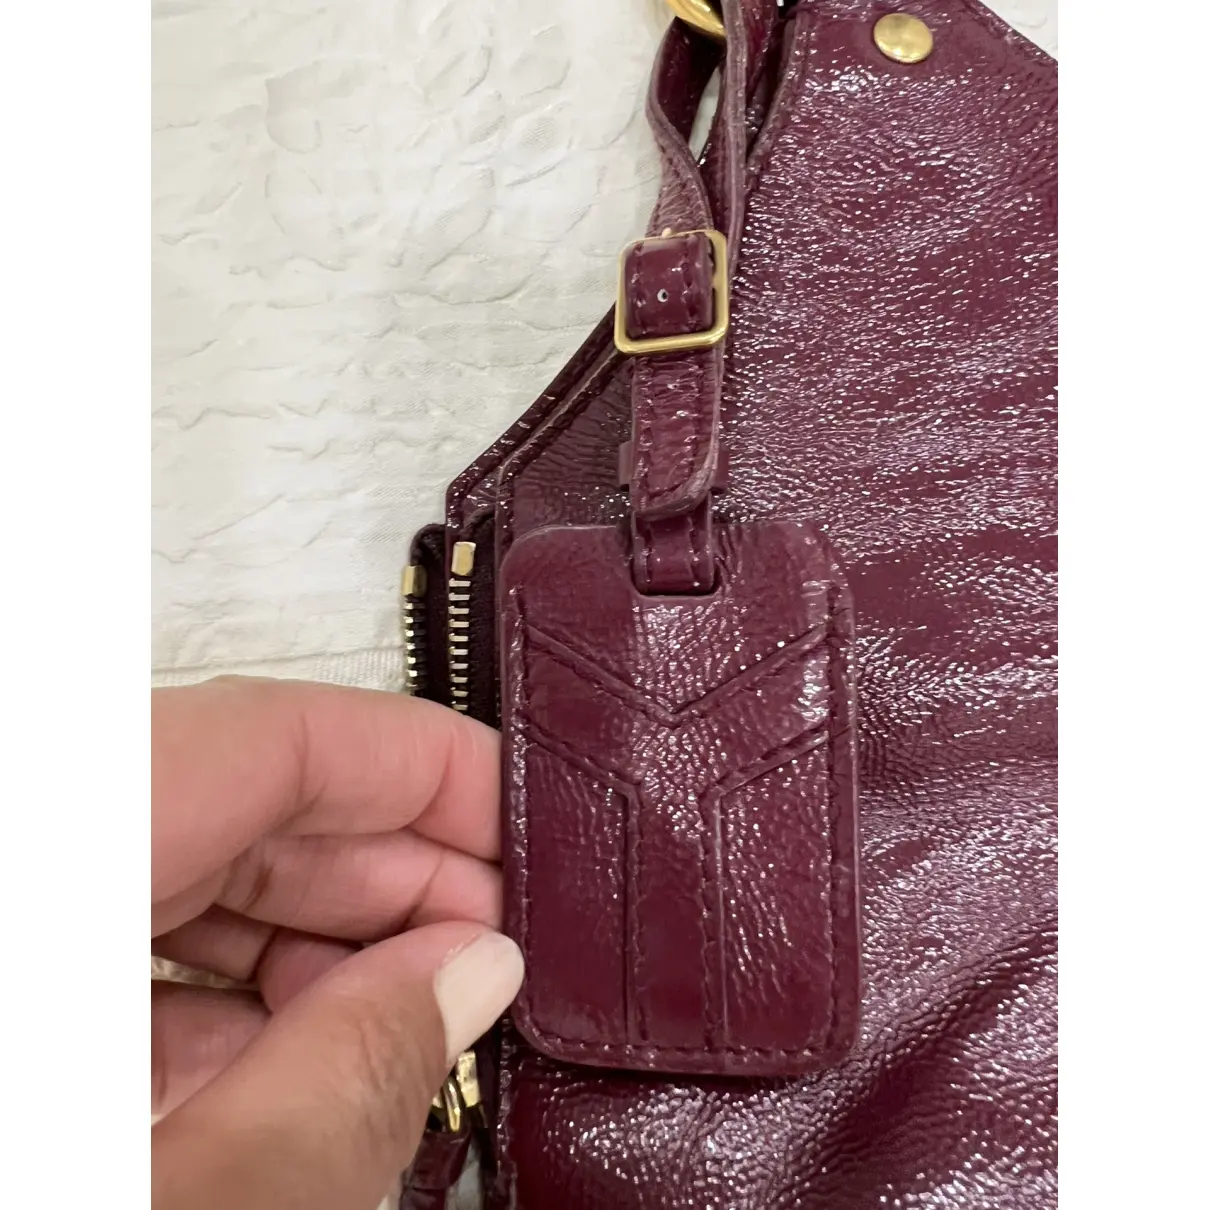 Buy Yves Saint Laurent Patent leather handbag online - Vintage